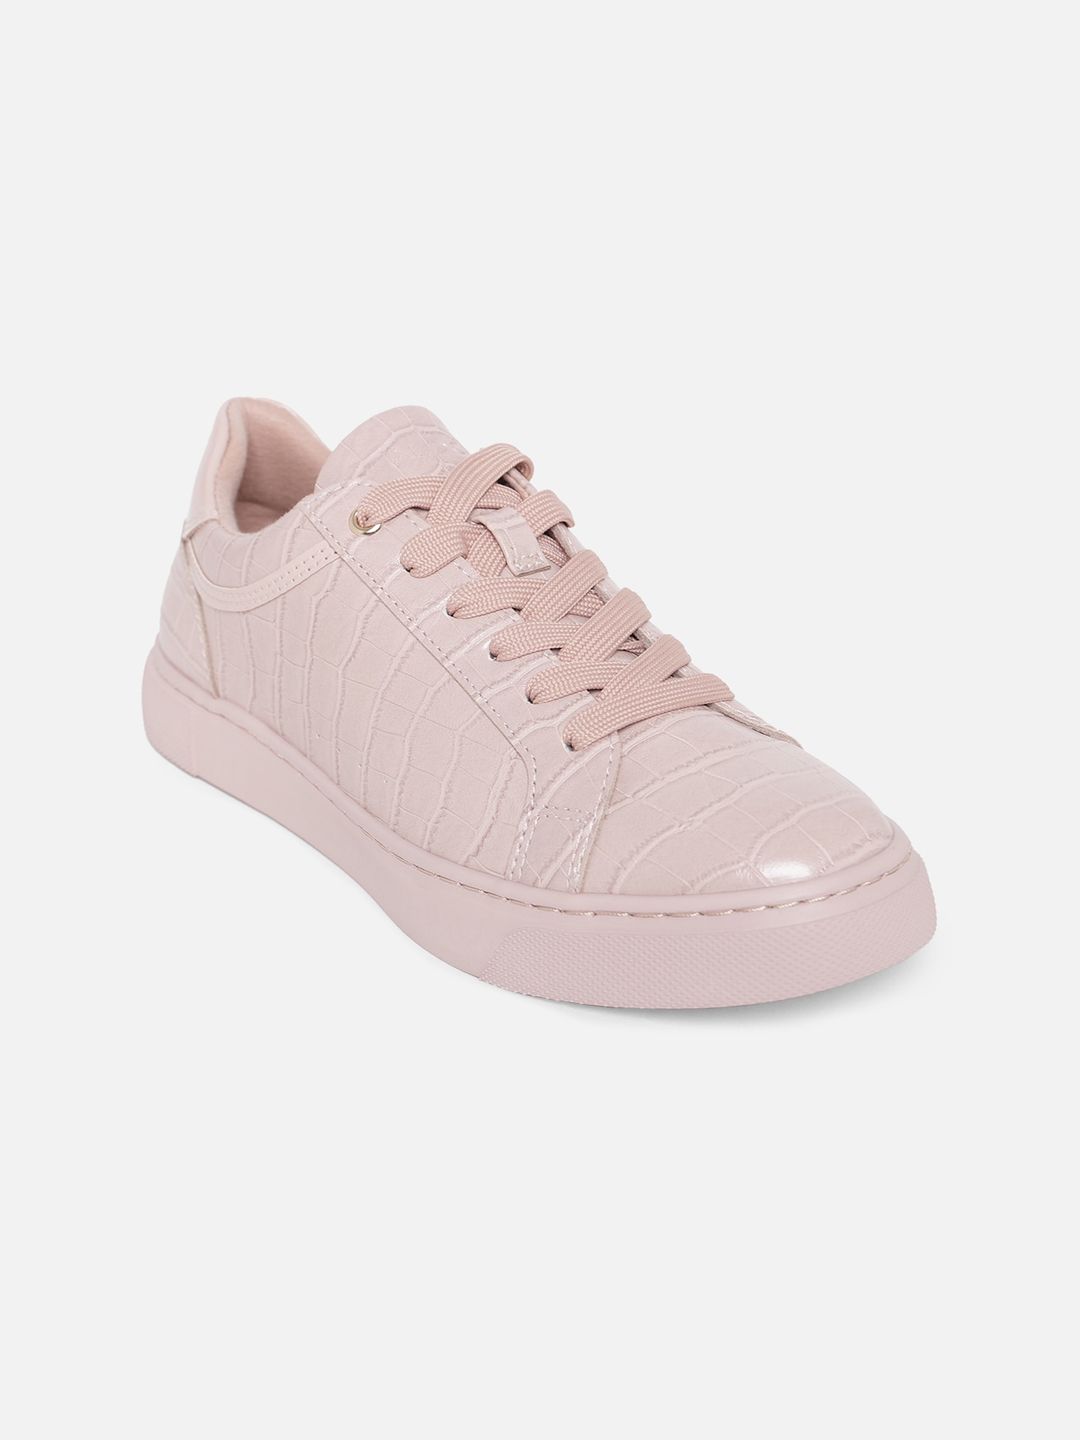 ALDO Women Pink Sneakers Price in India